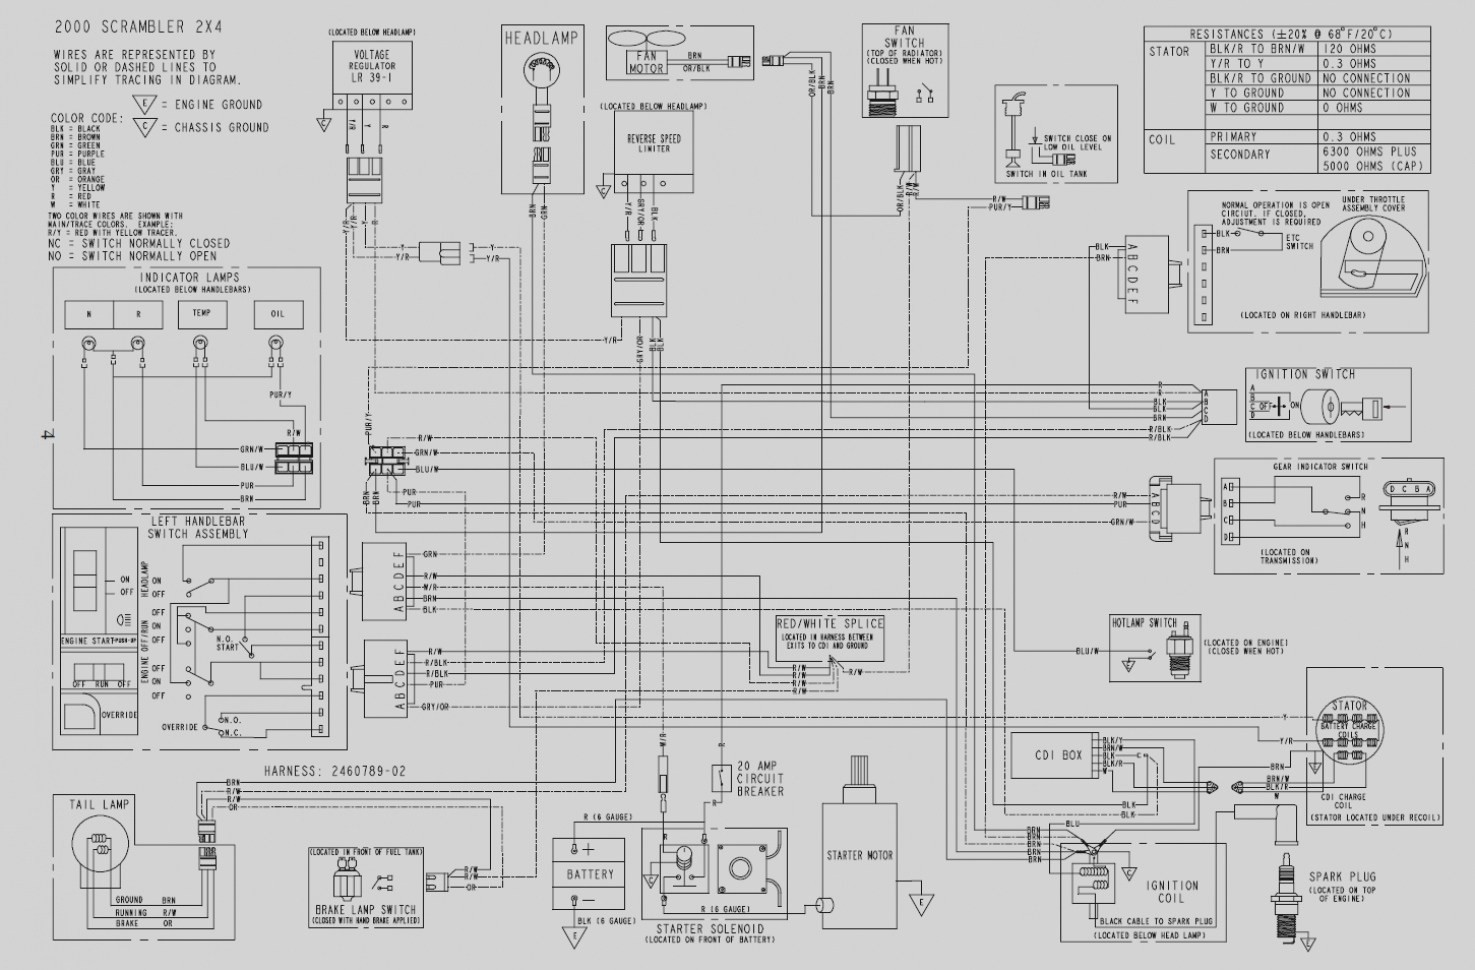 Get Polaris Rzr 800 Wiring Diagram Sample